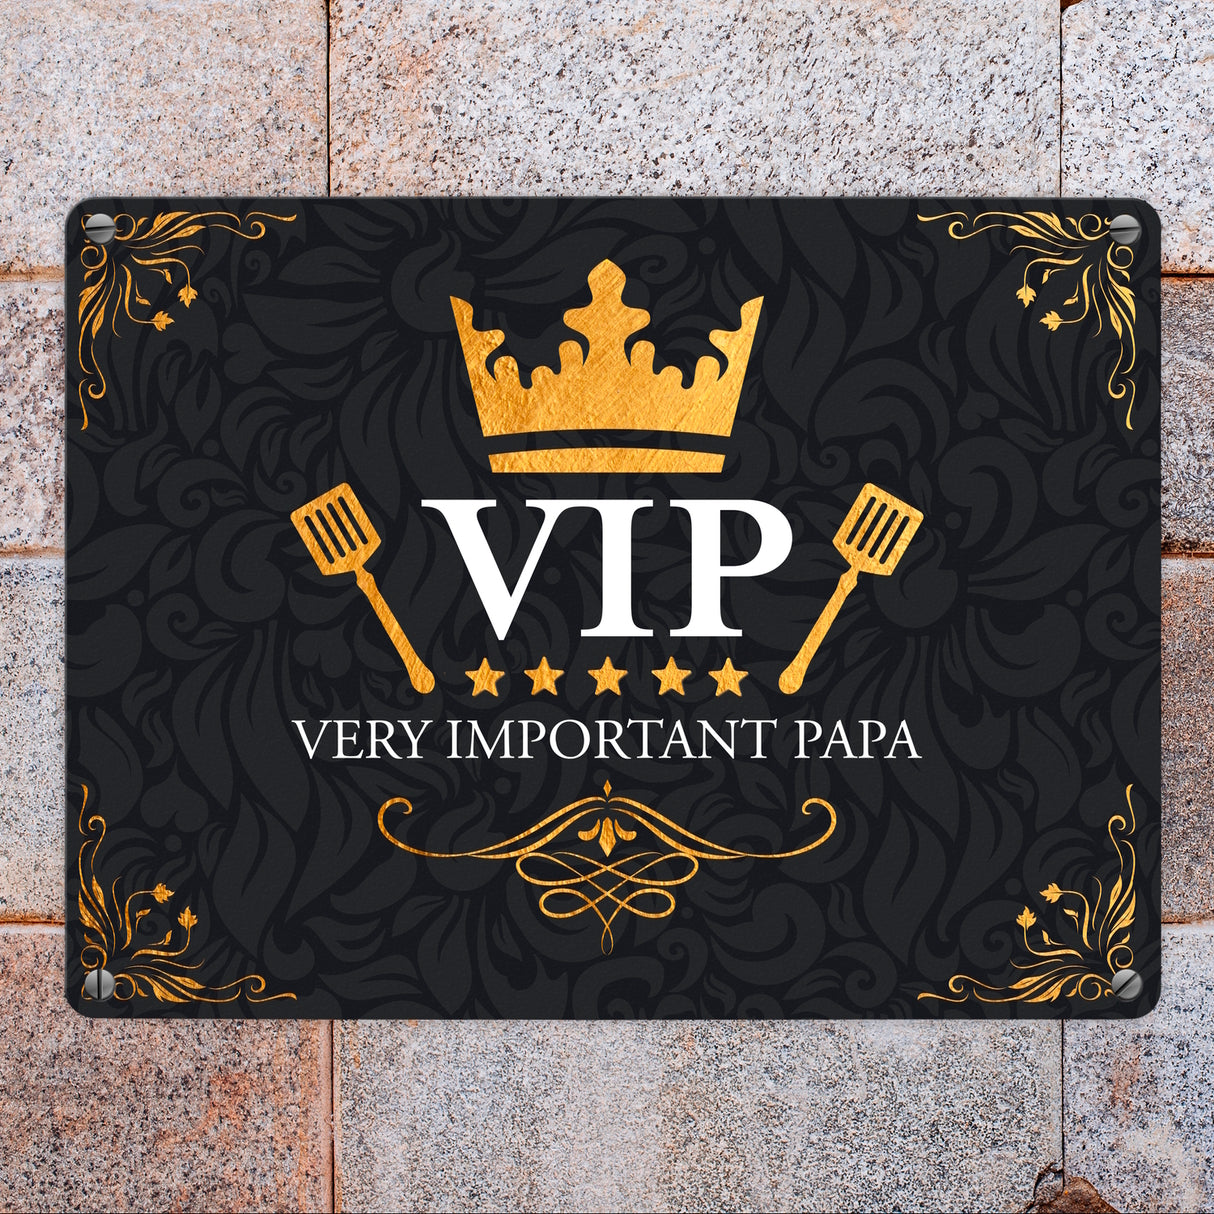 Very Important Papa Metallschild mit VIP Motiv